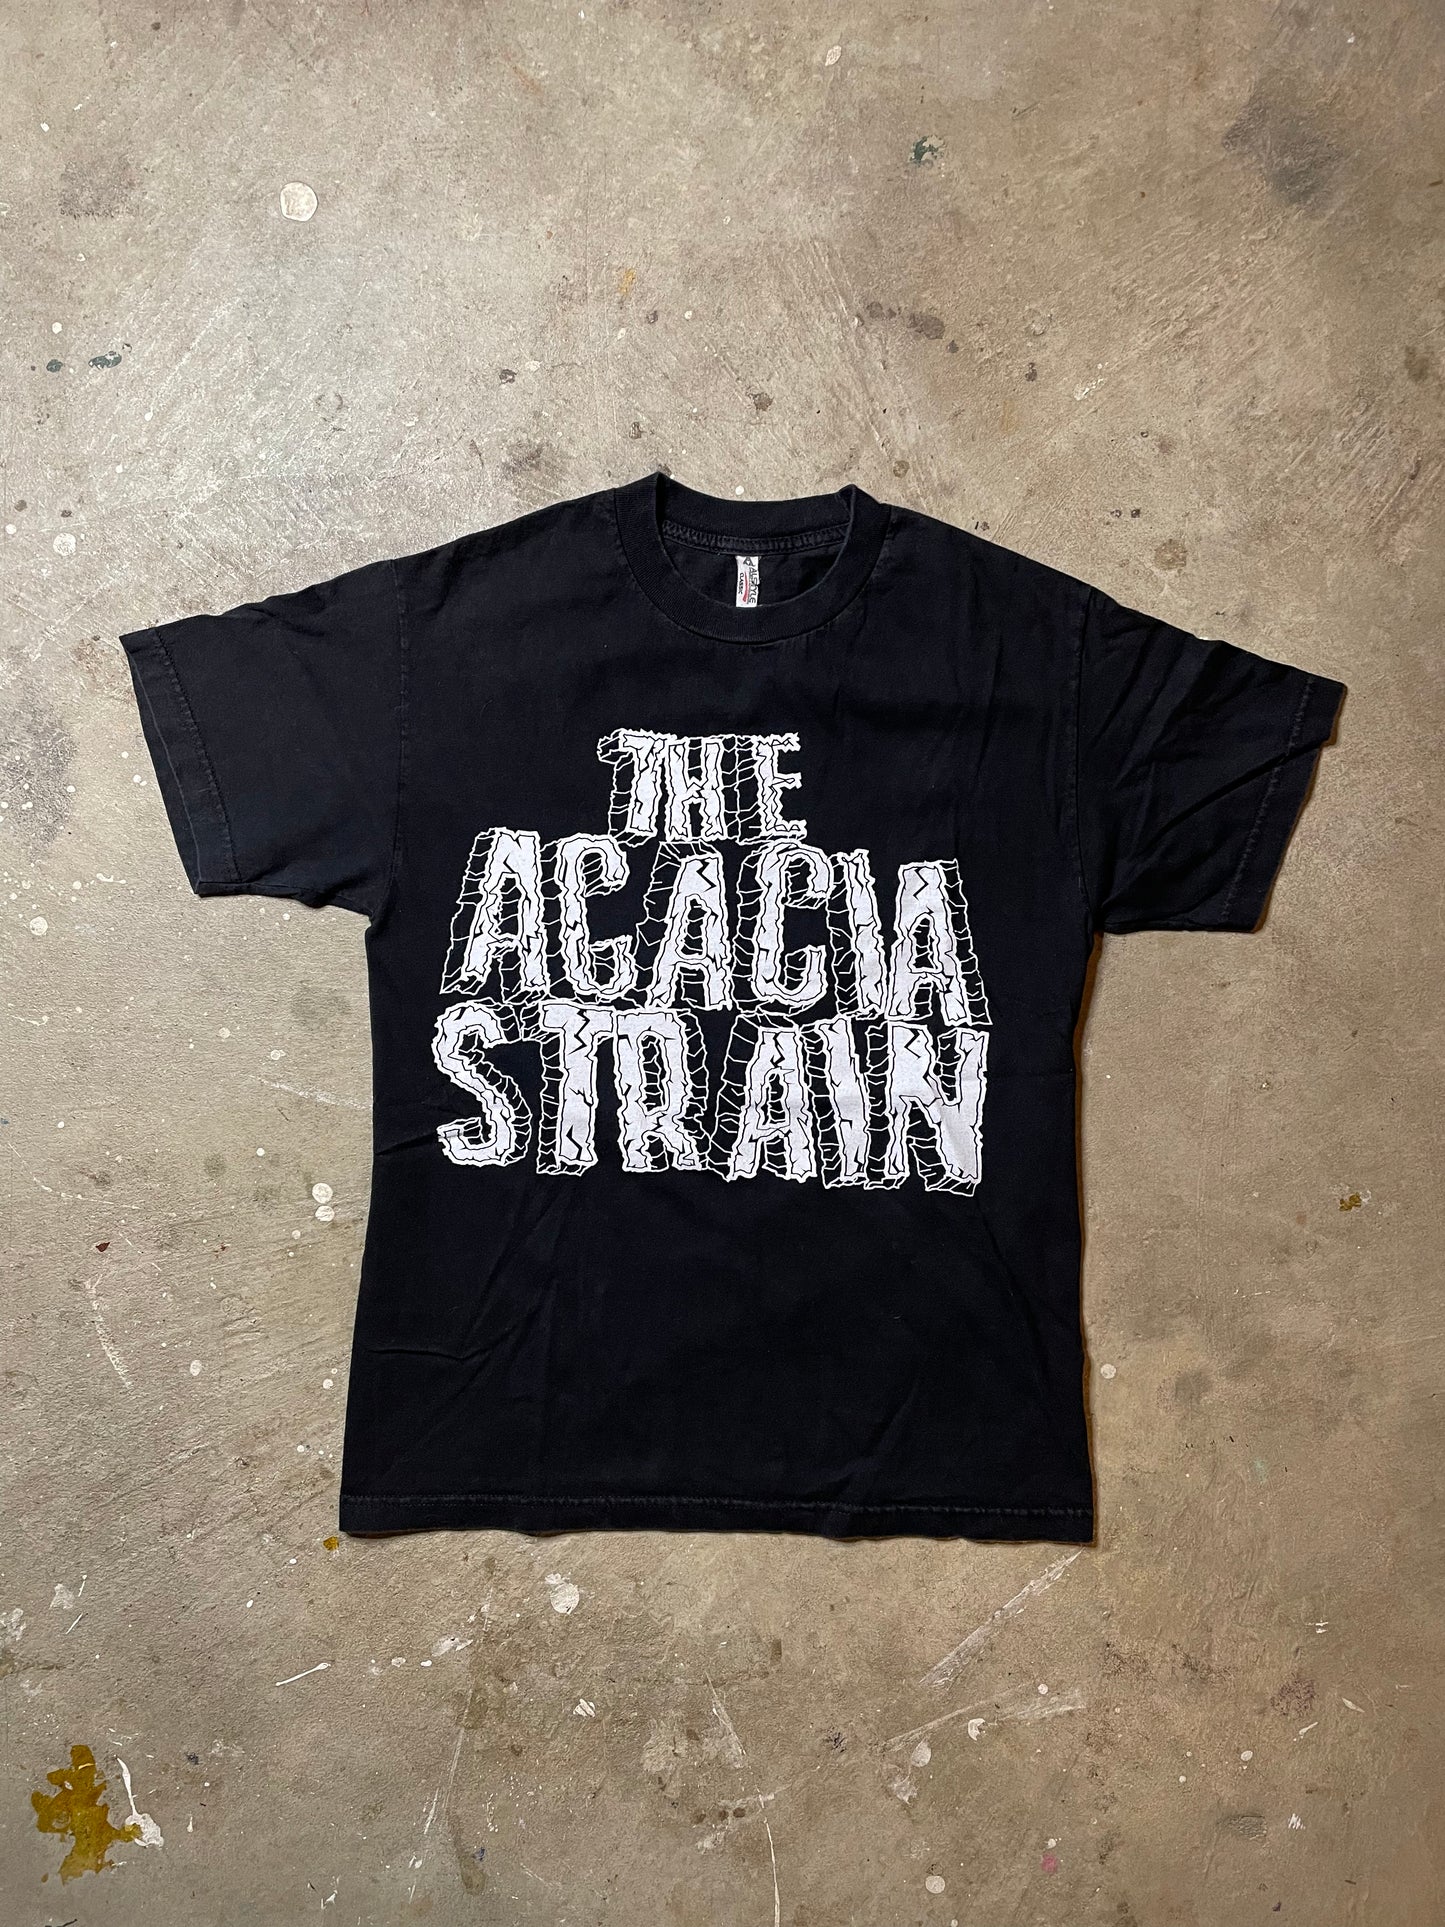 The Acacia Strain Tee